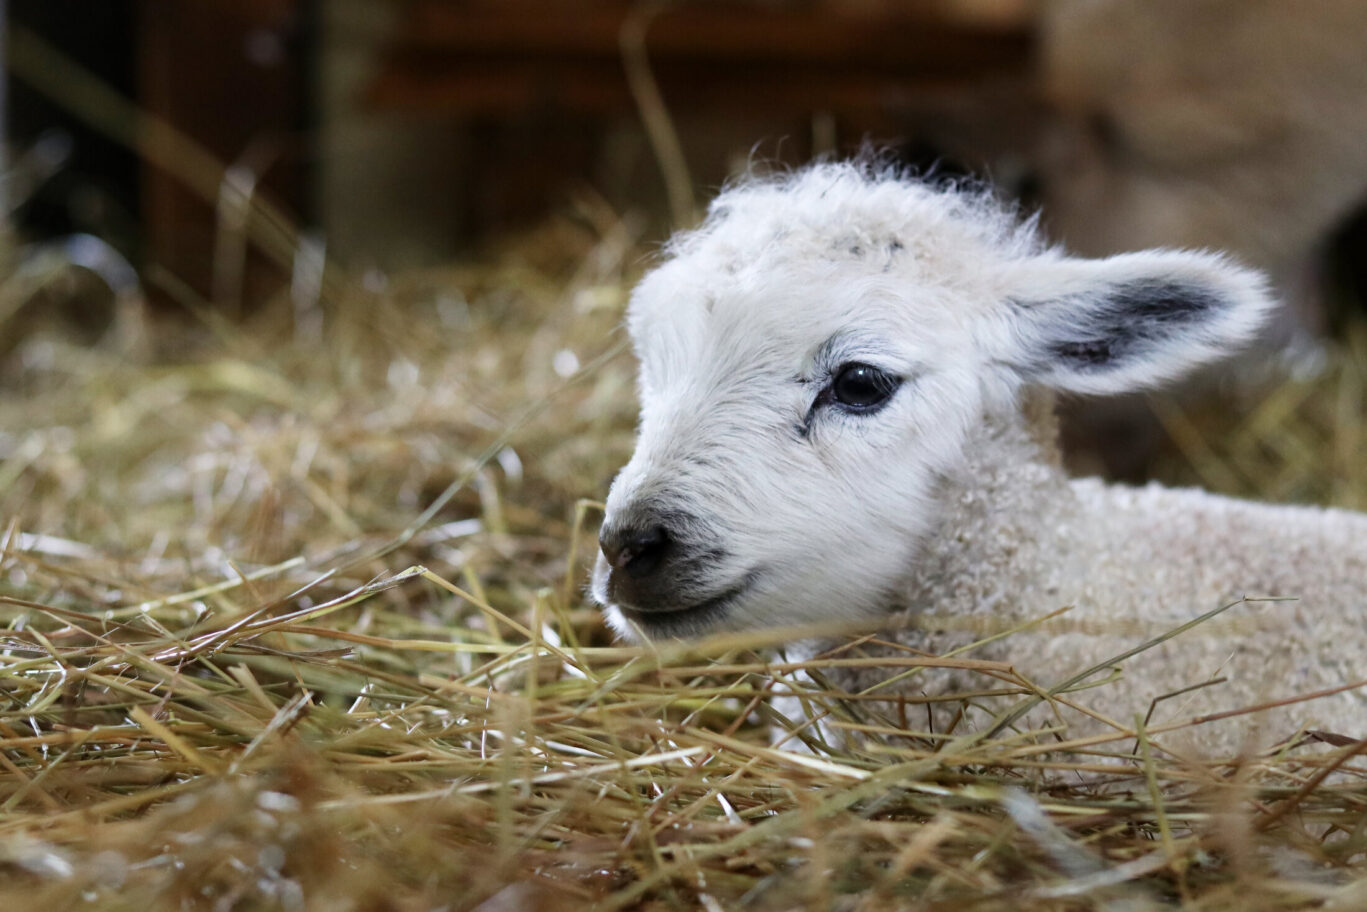 Lamb in hay at Willow's Activity Farm